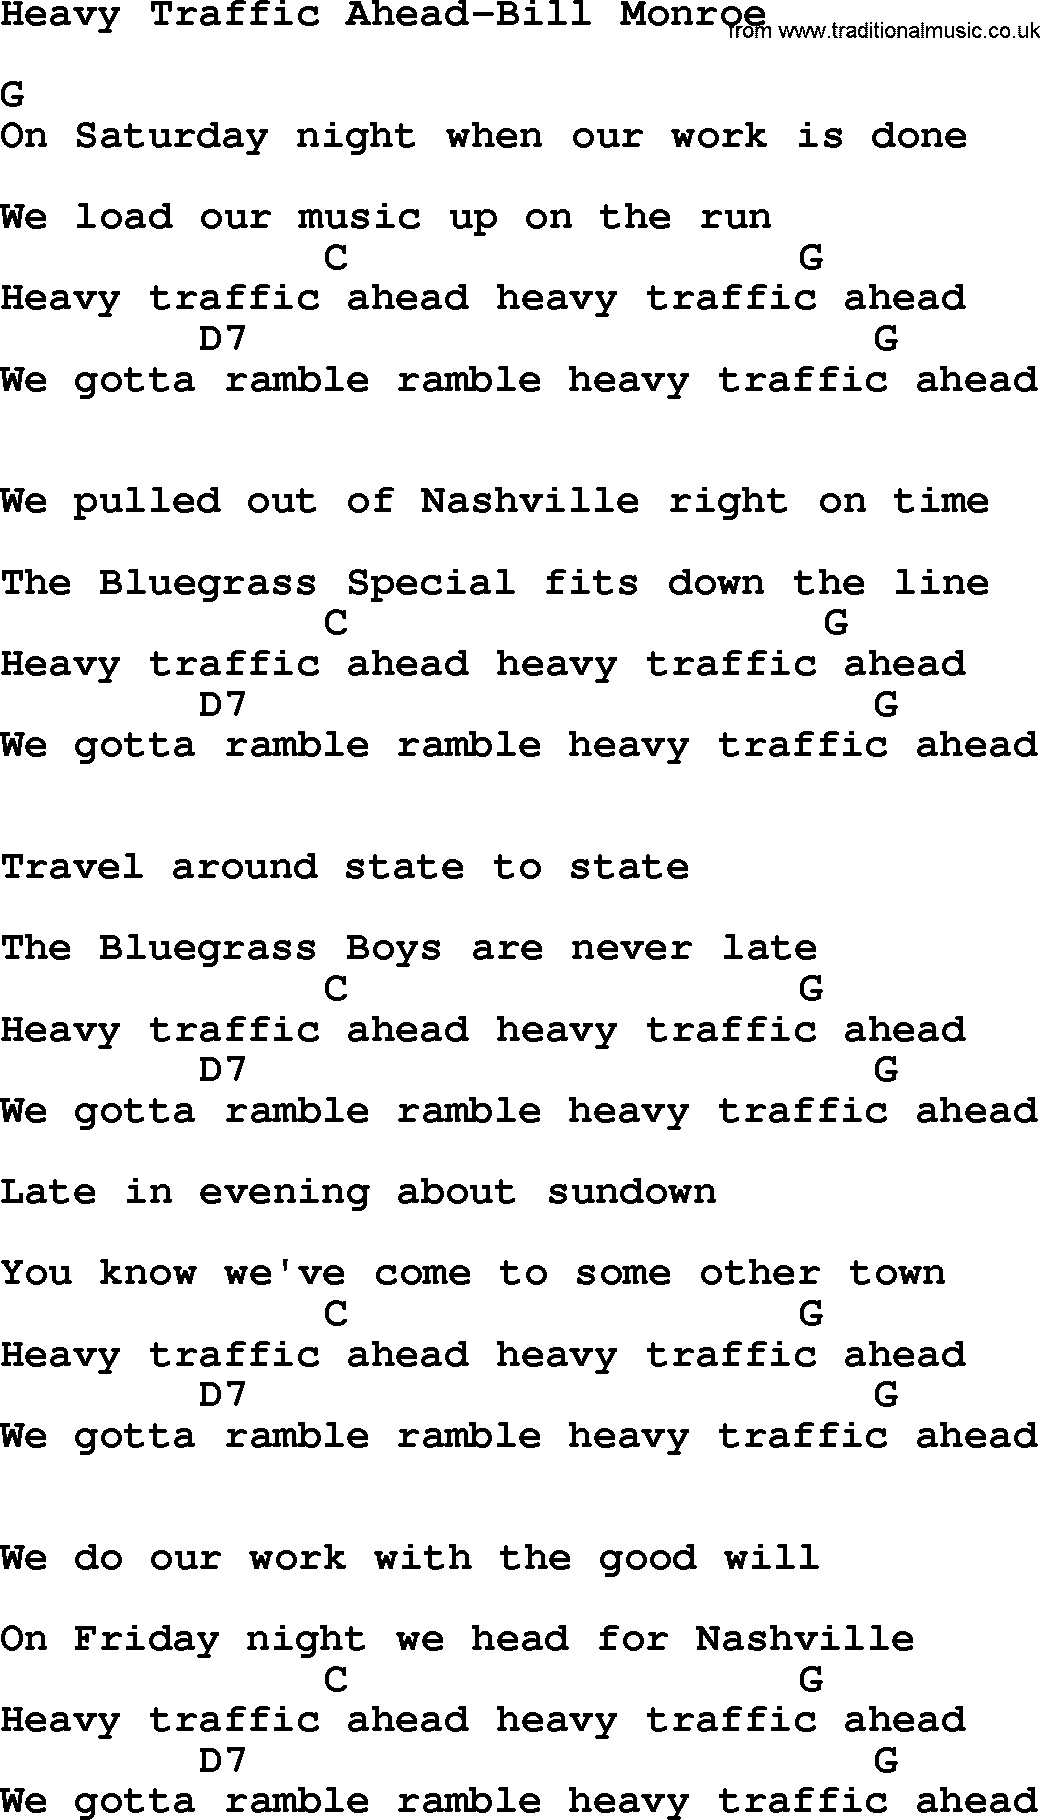 Country music song: Heavy Traffic Ahead-Bill Monroe lyrics and chords